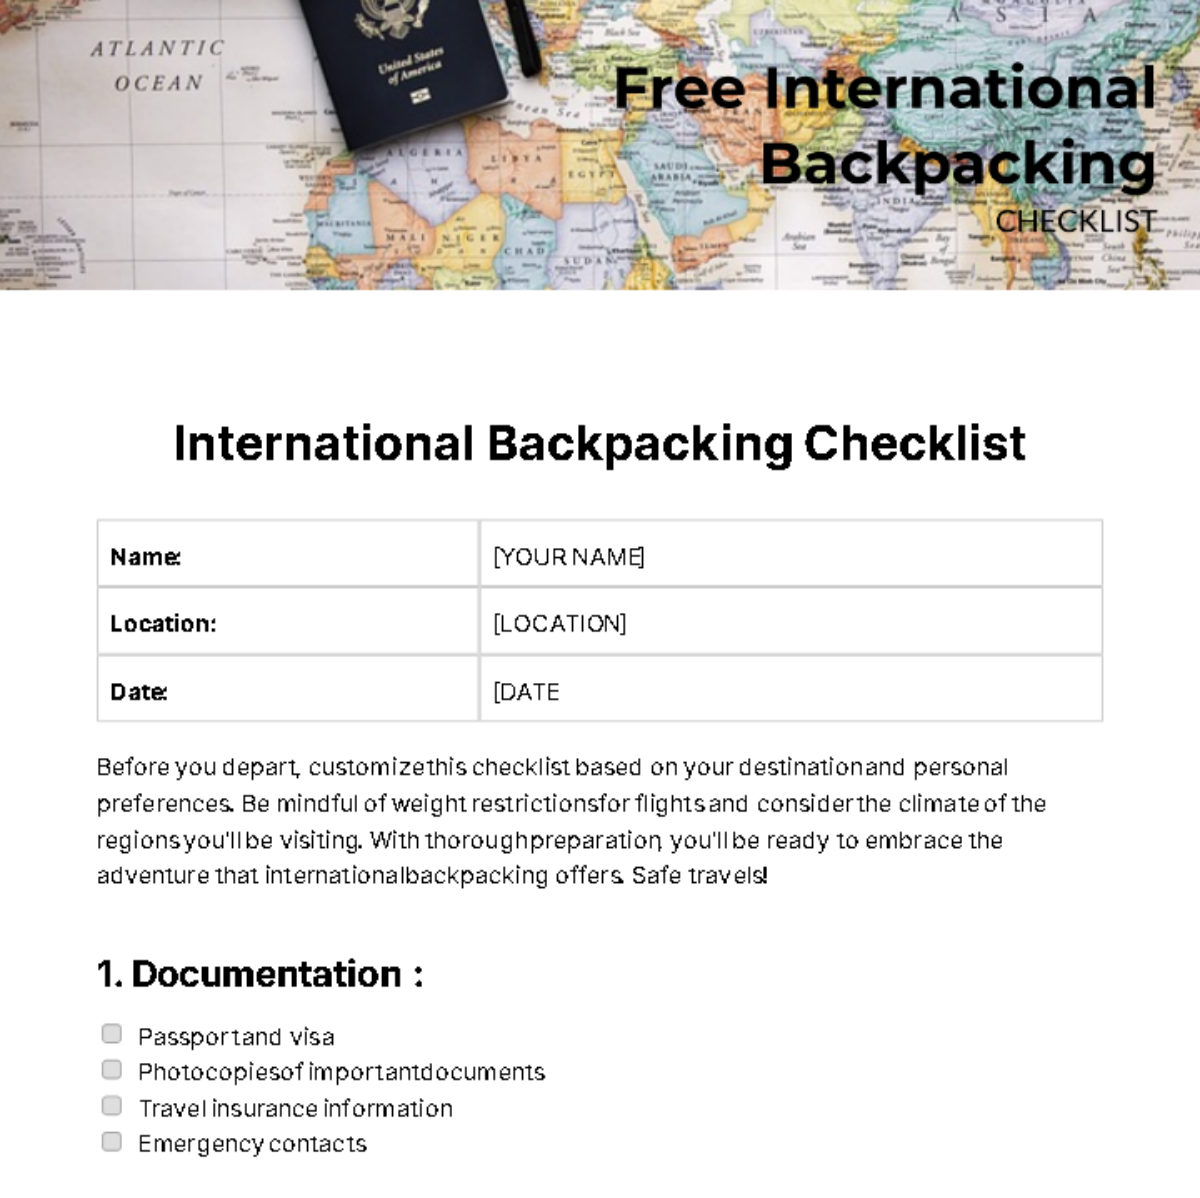 International Backpacking Checklist Template